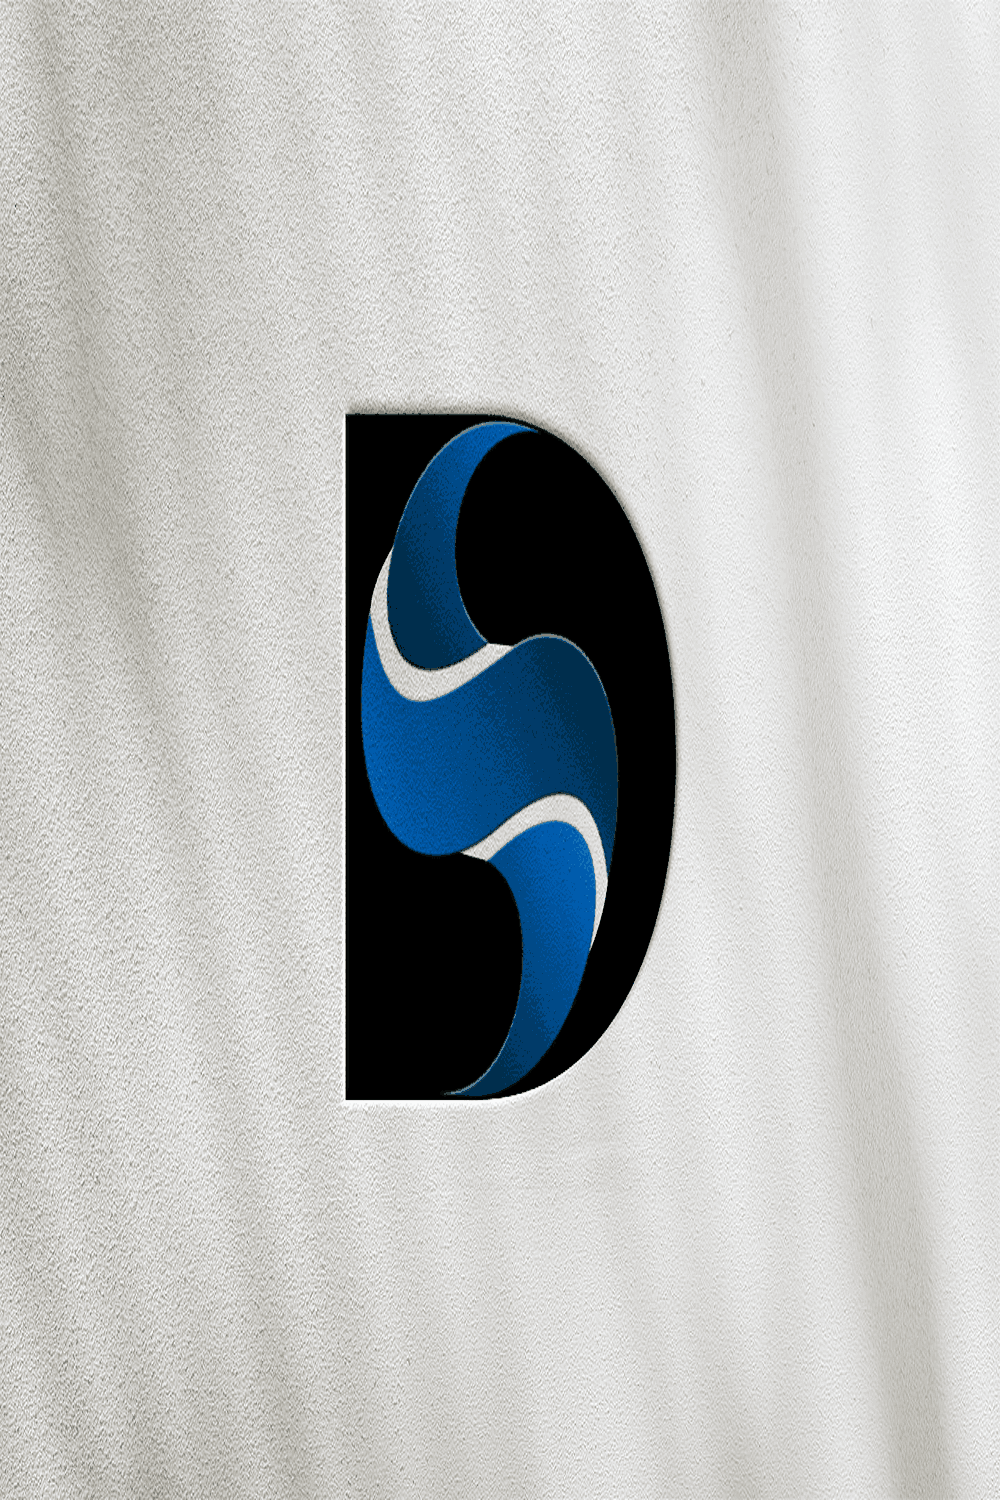 Ds Logo Design - pinterest image preview.